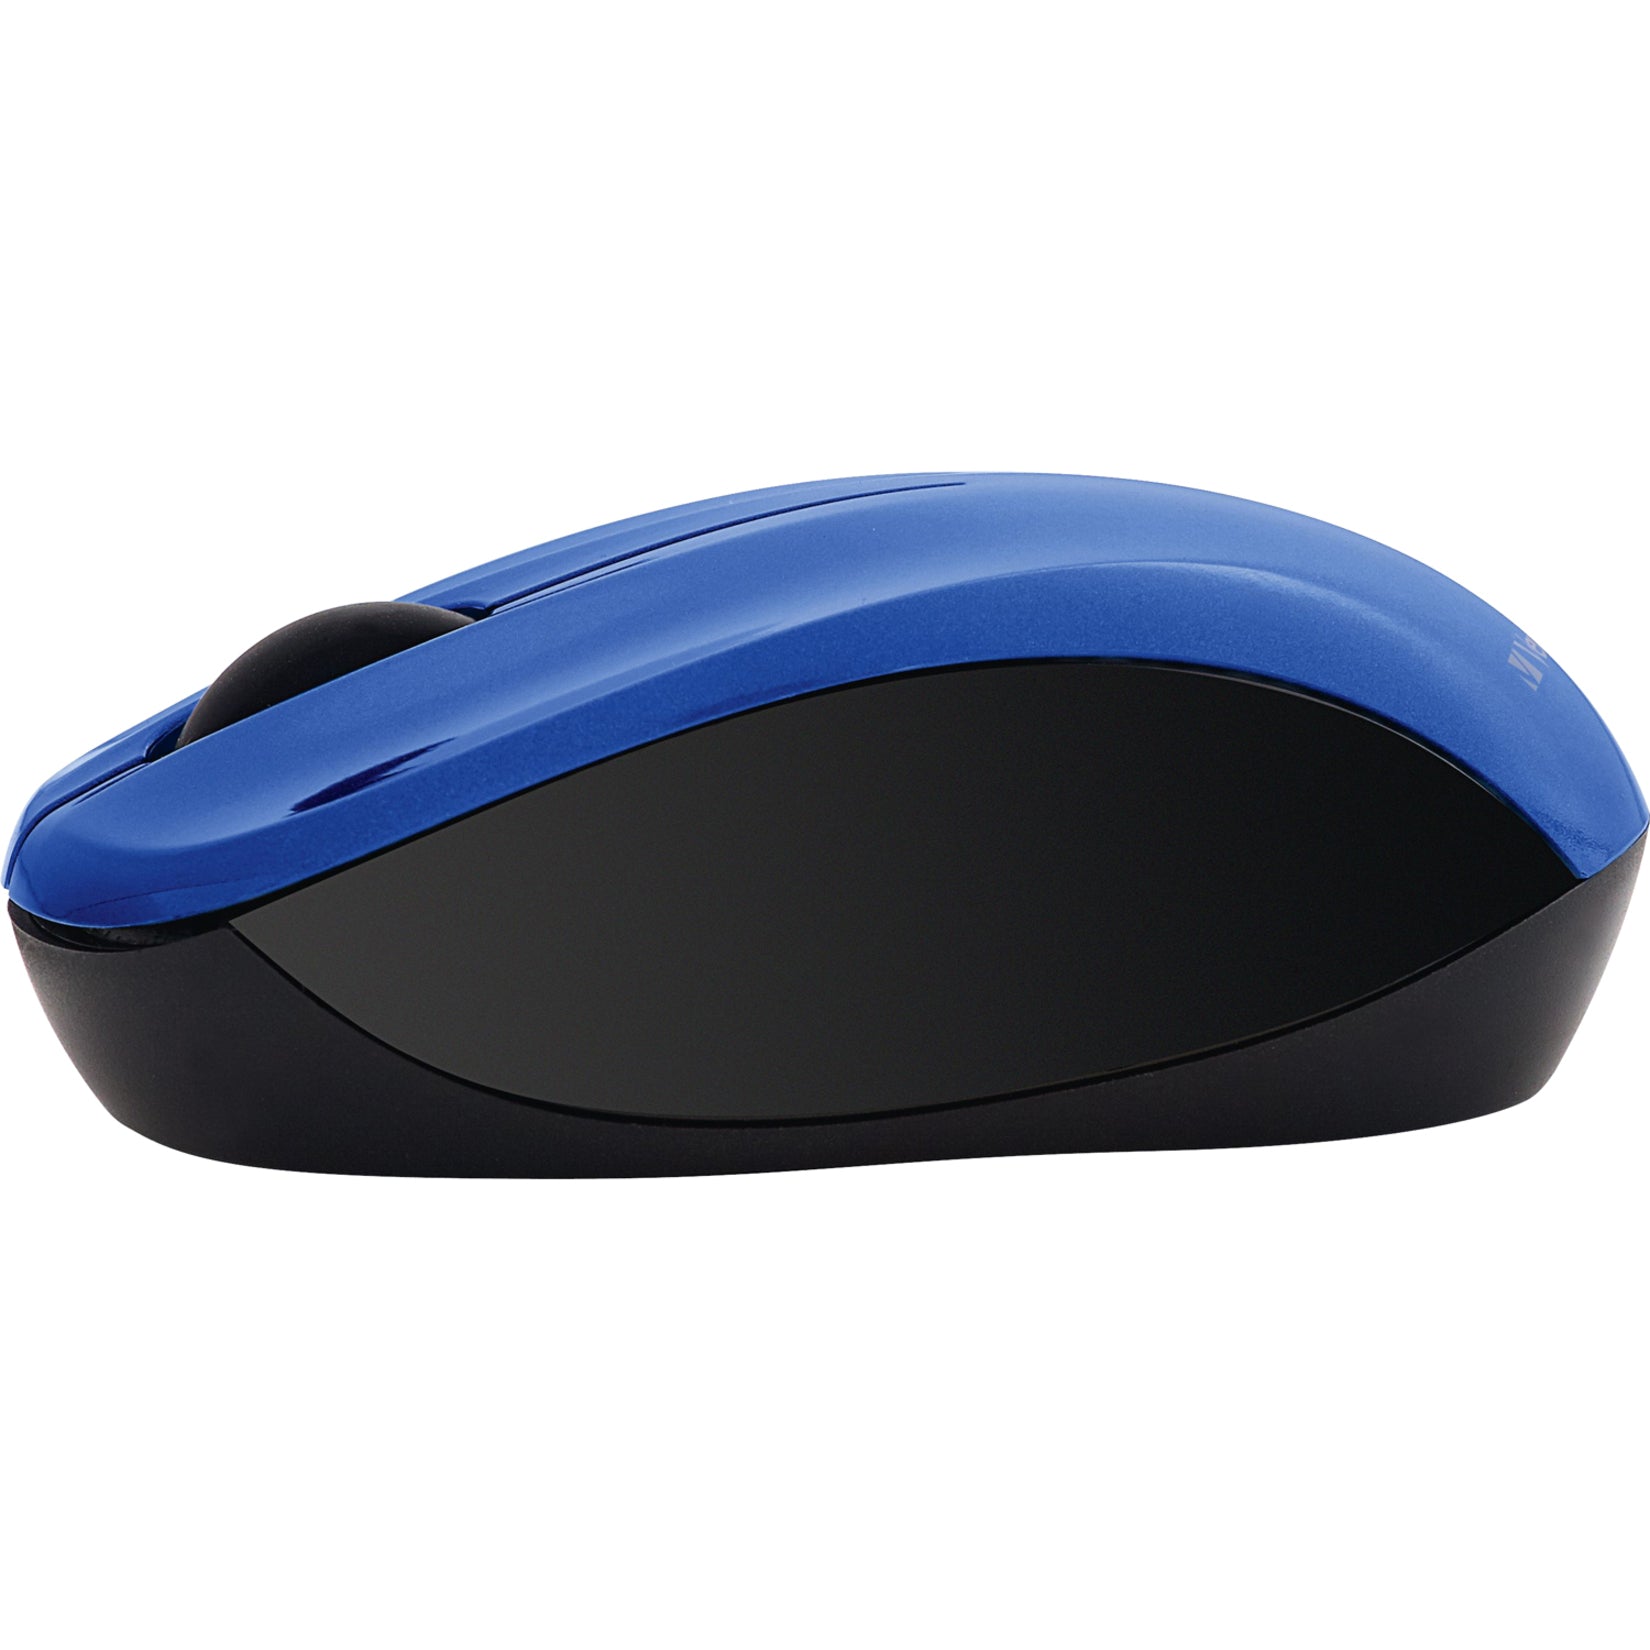 Verbatim 99770 Stille kabellose blaue LED-Maus - Blau Kabellos für PCs & Macs